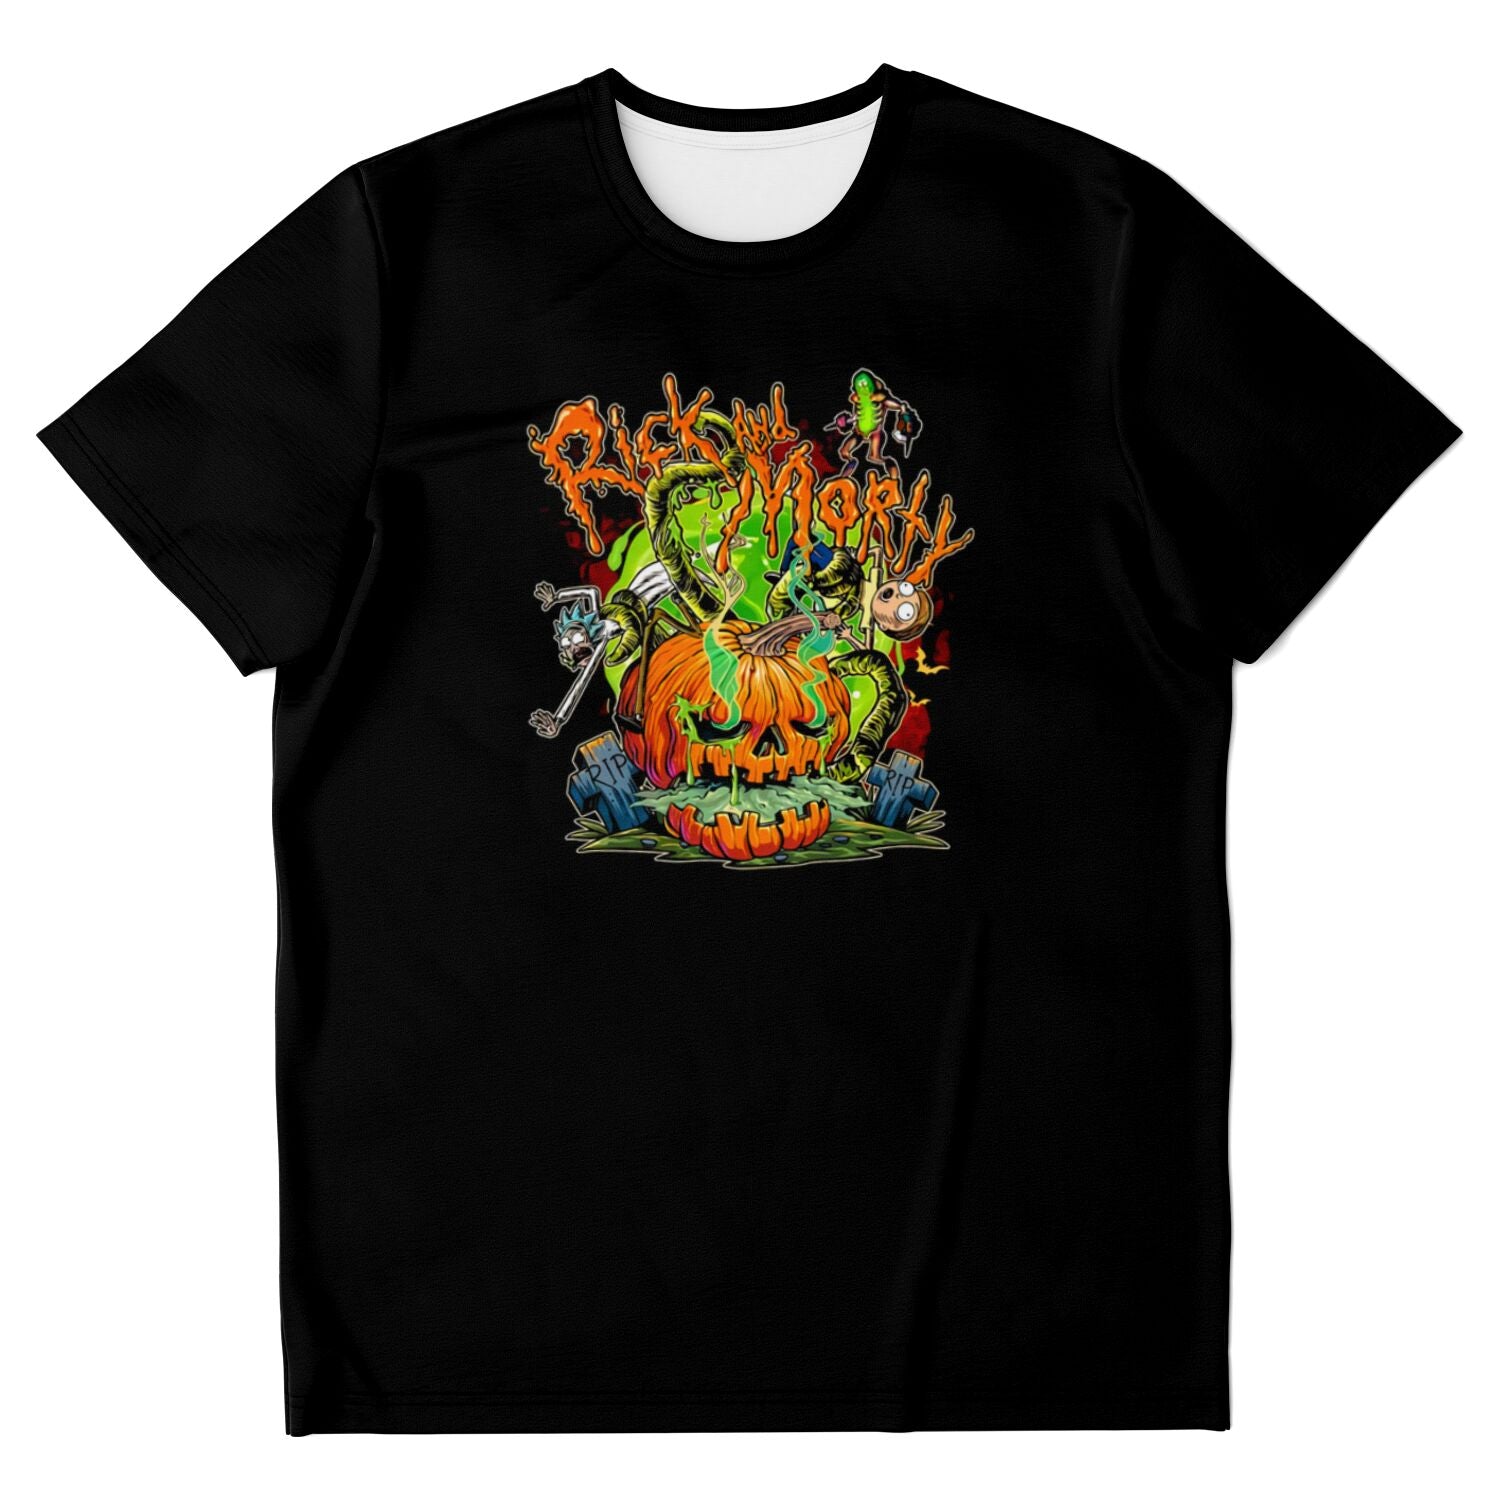 Rick and morty halloween T-shirt